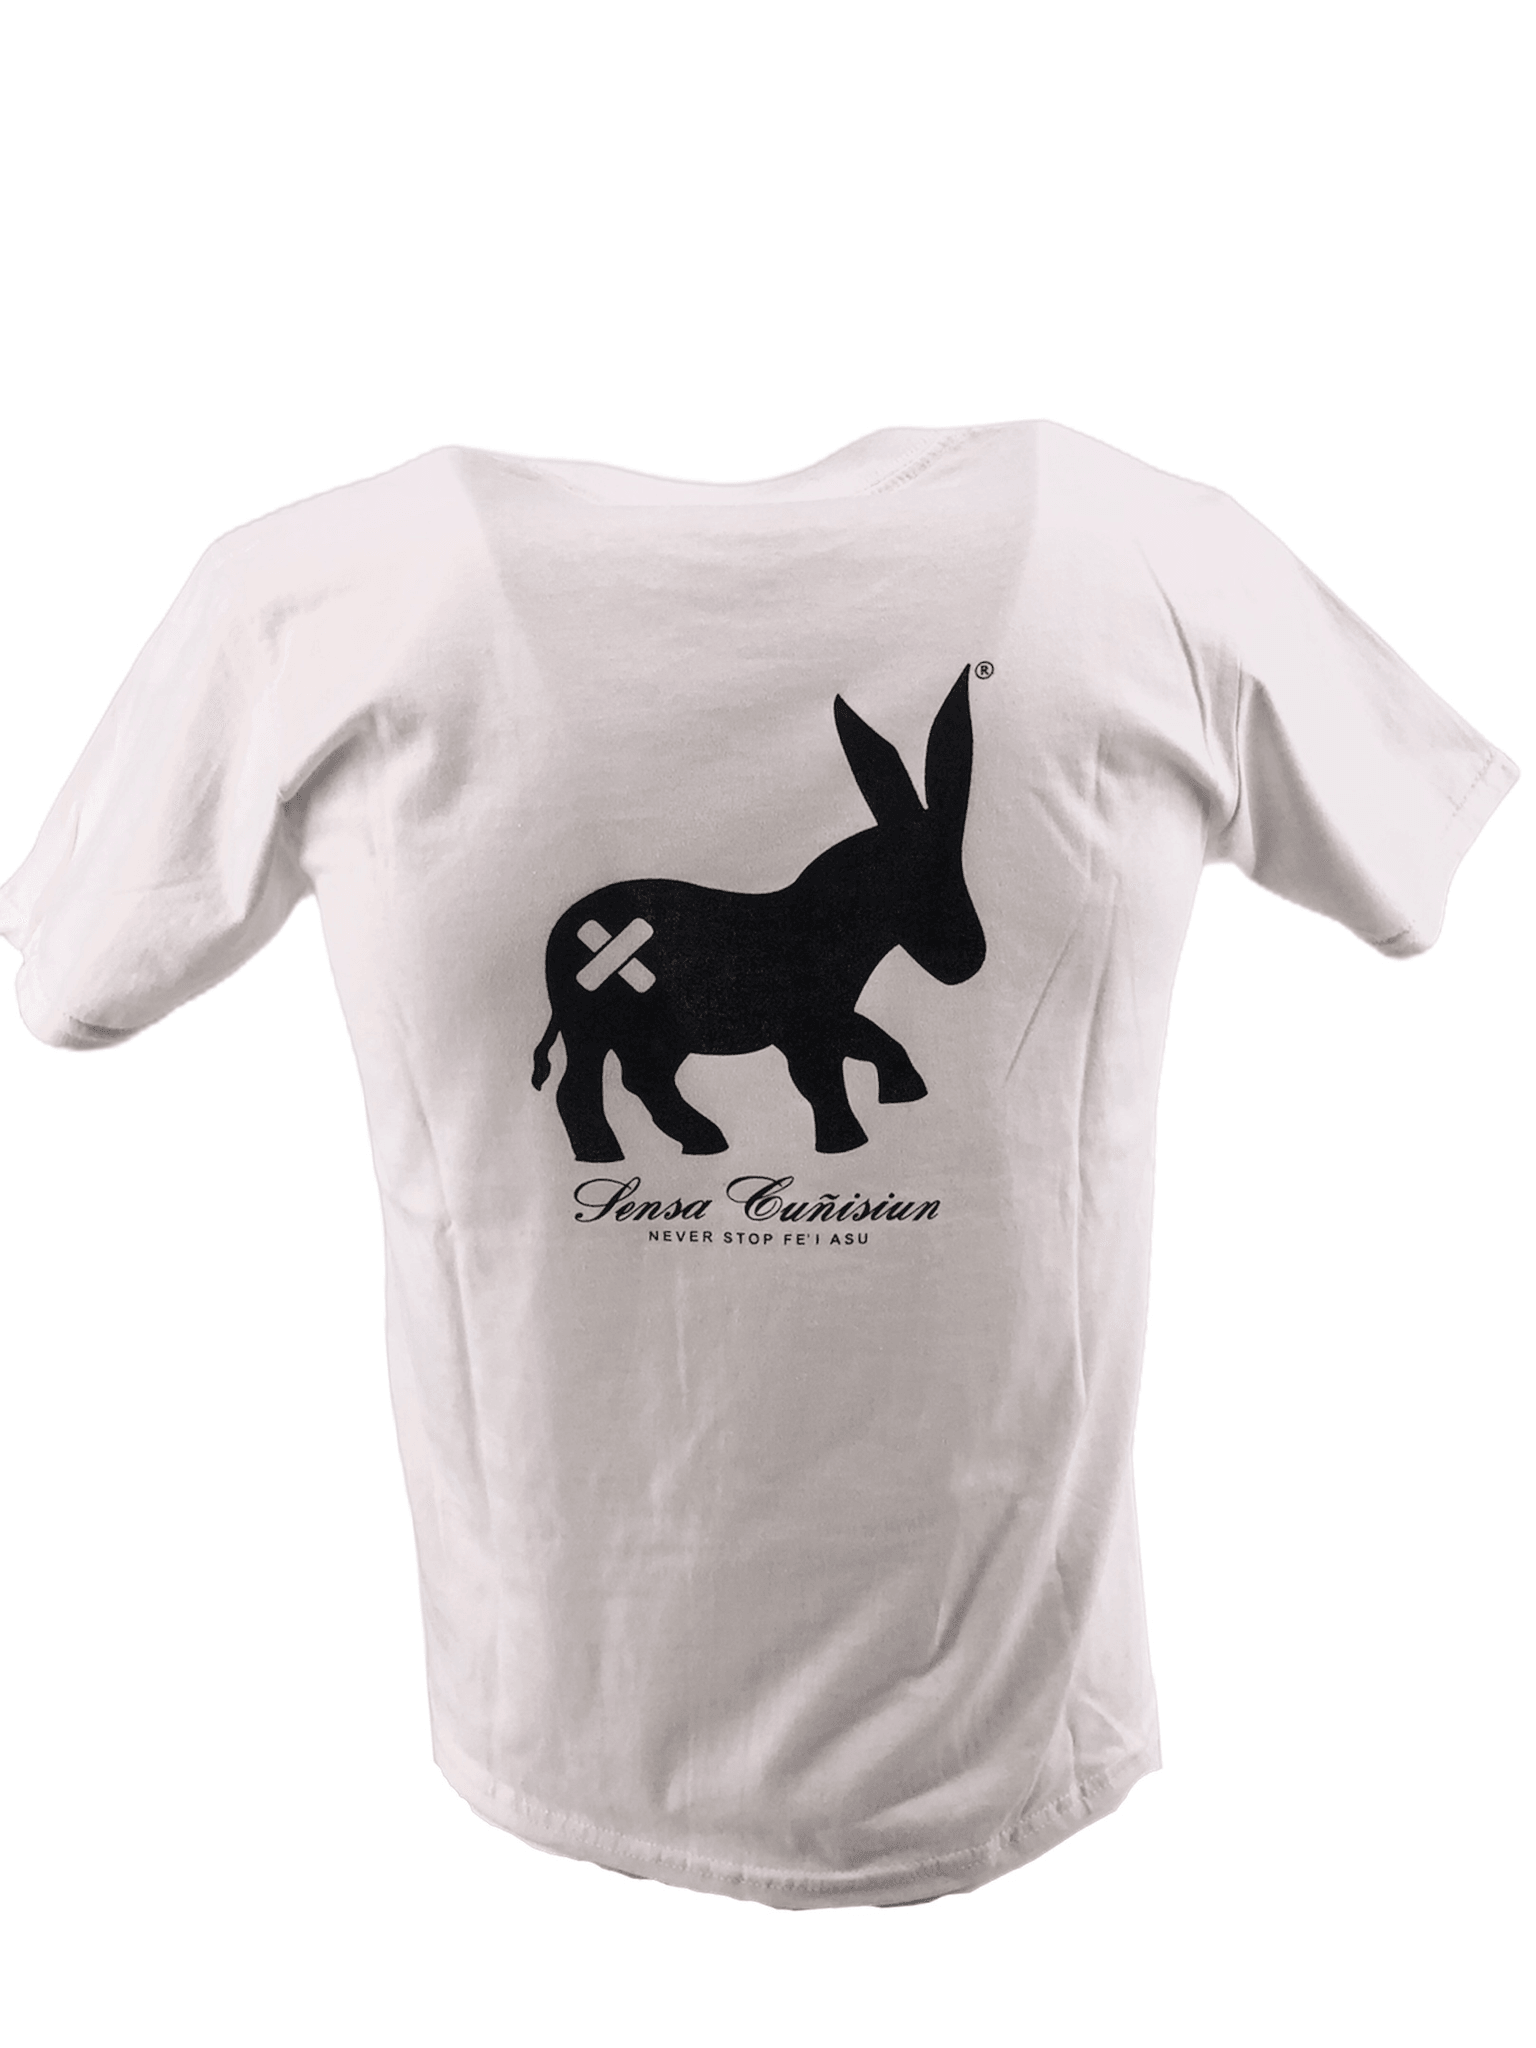 Sensa Cunisiun | T-shirt Classic Logo Uomo Bianco/Nero - Fabbrica Ski Sises